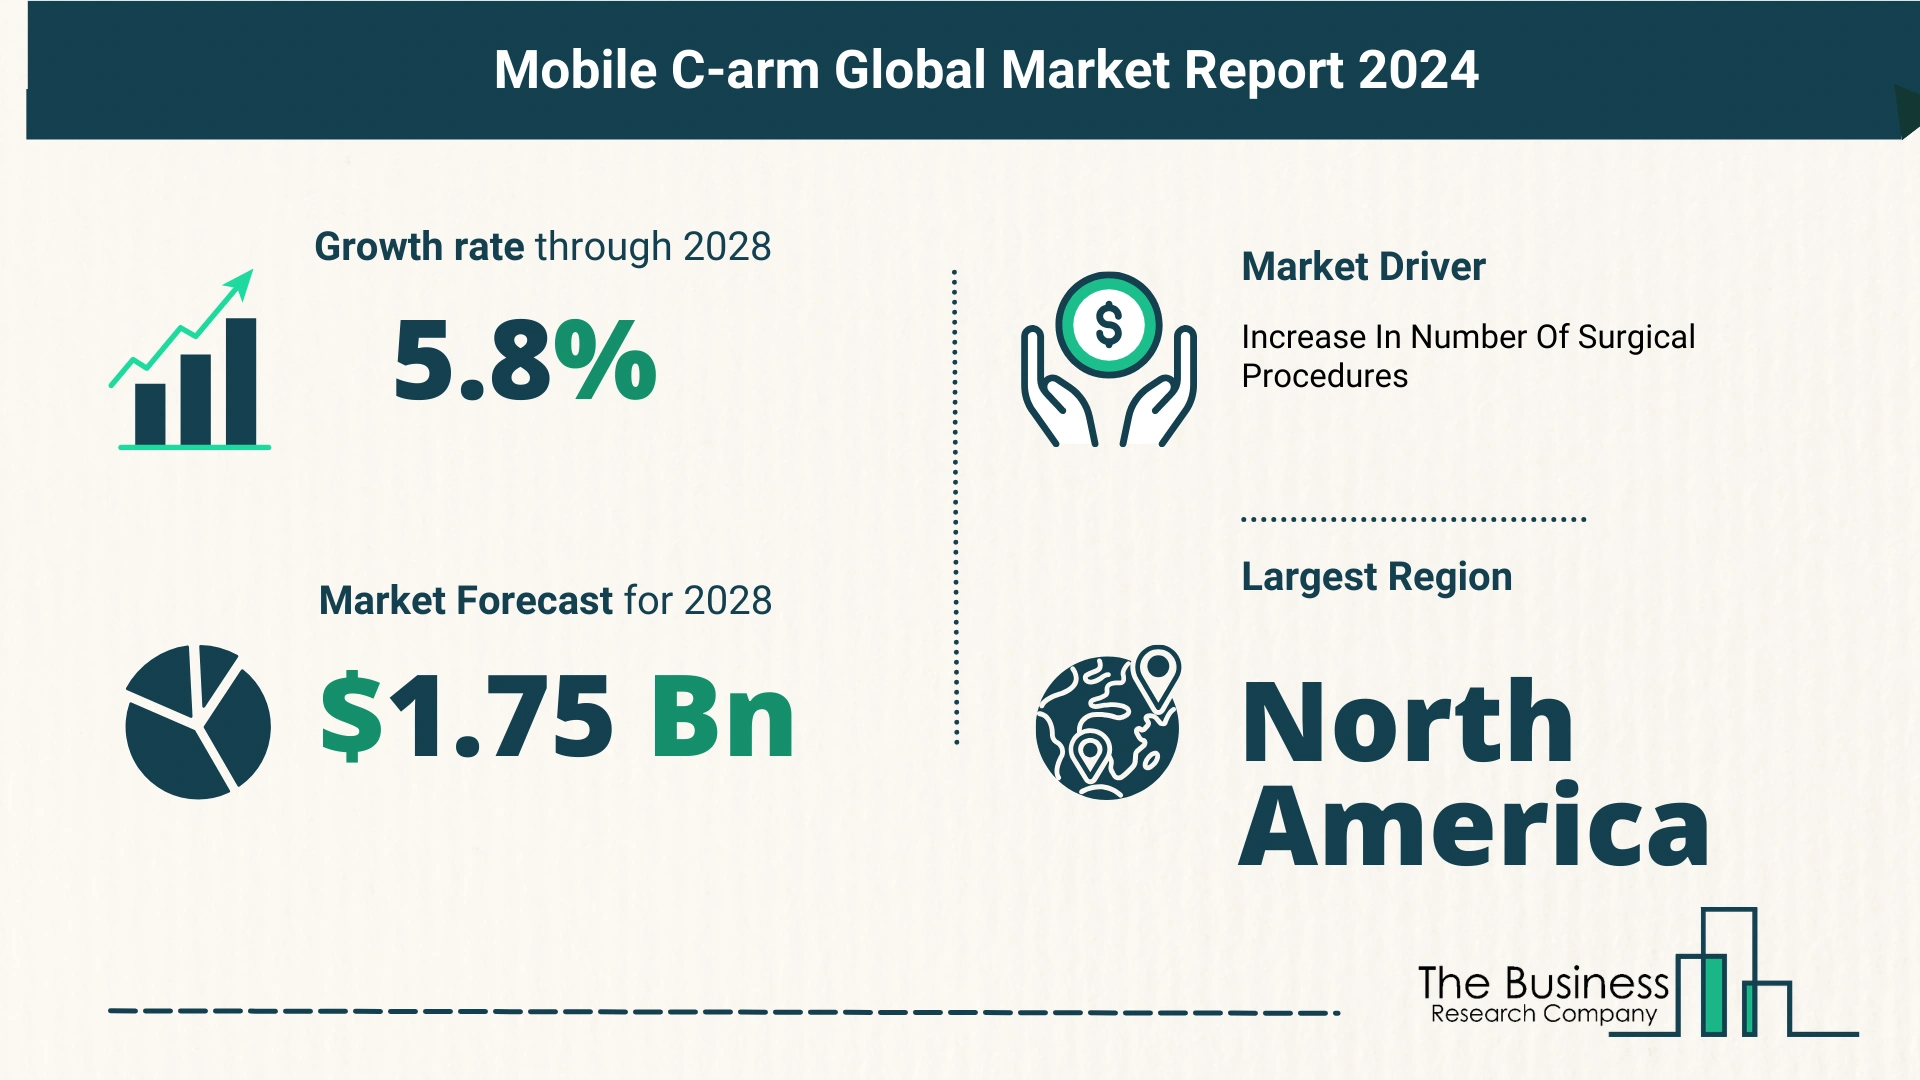 Global Mobile C-arm Market